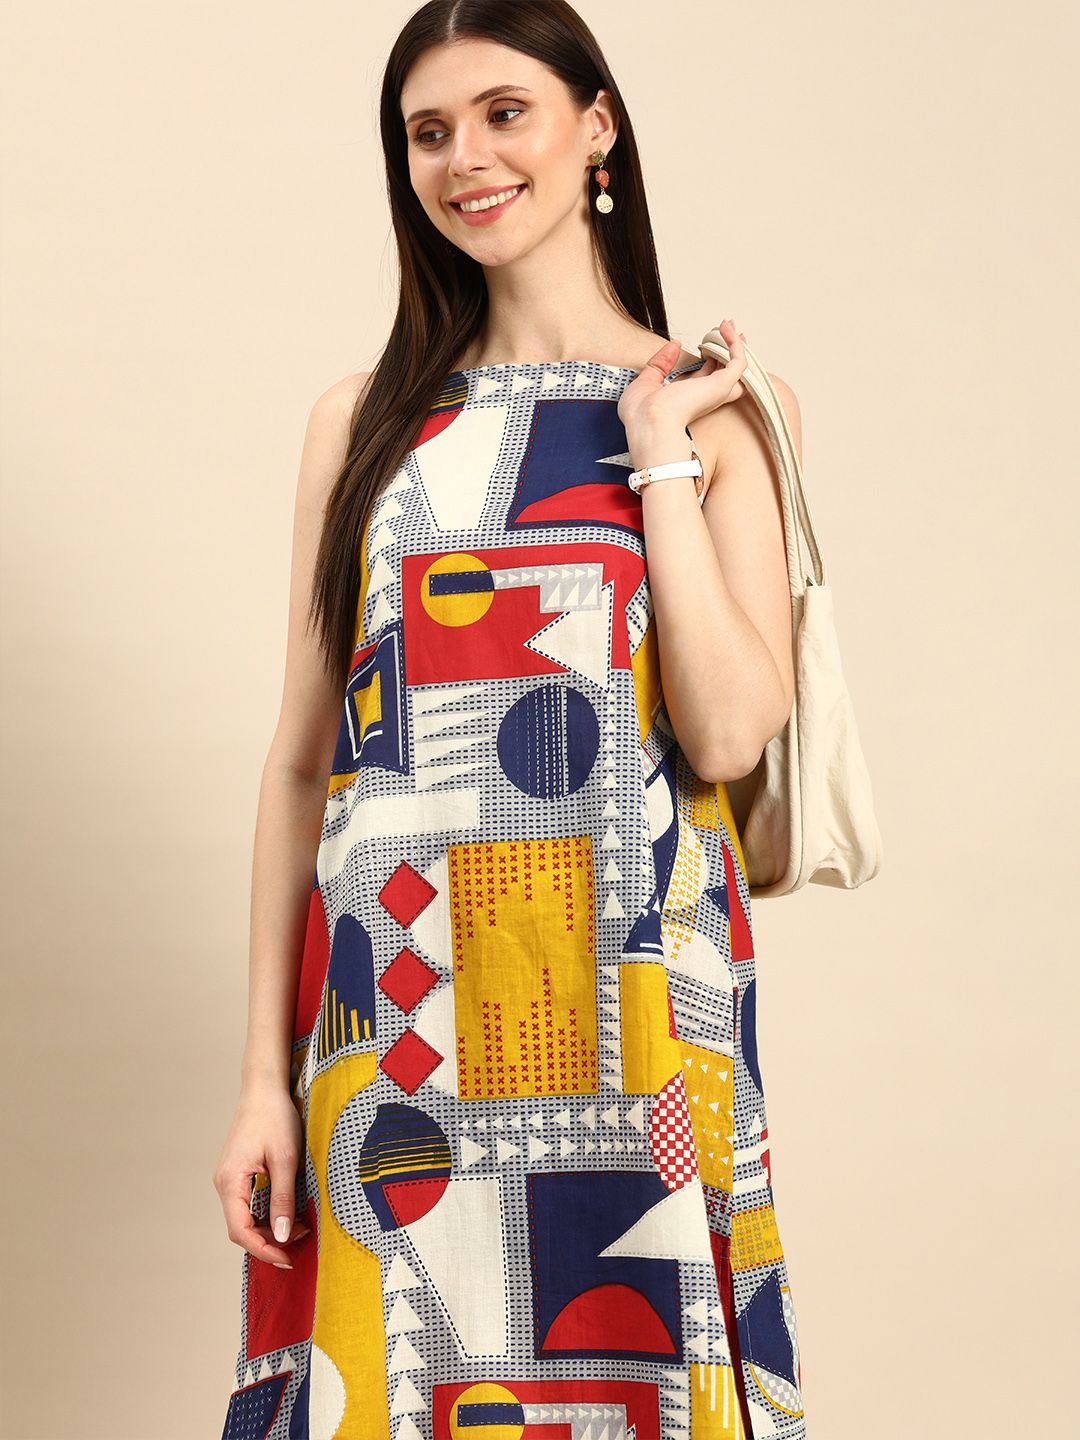 Anouk Multicoloured Printed Ethnic Sheath Dress Price in India